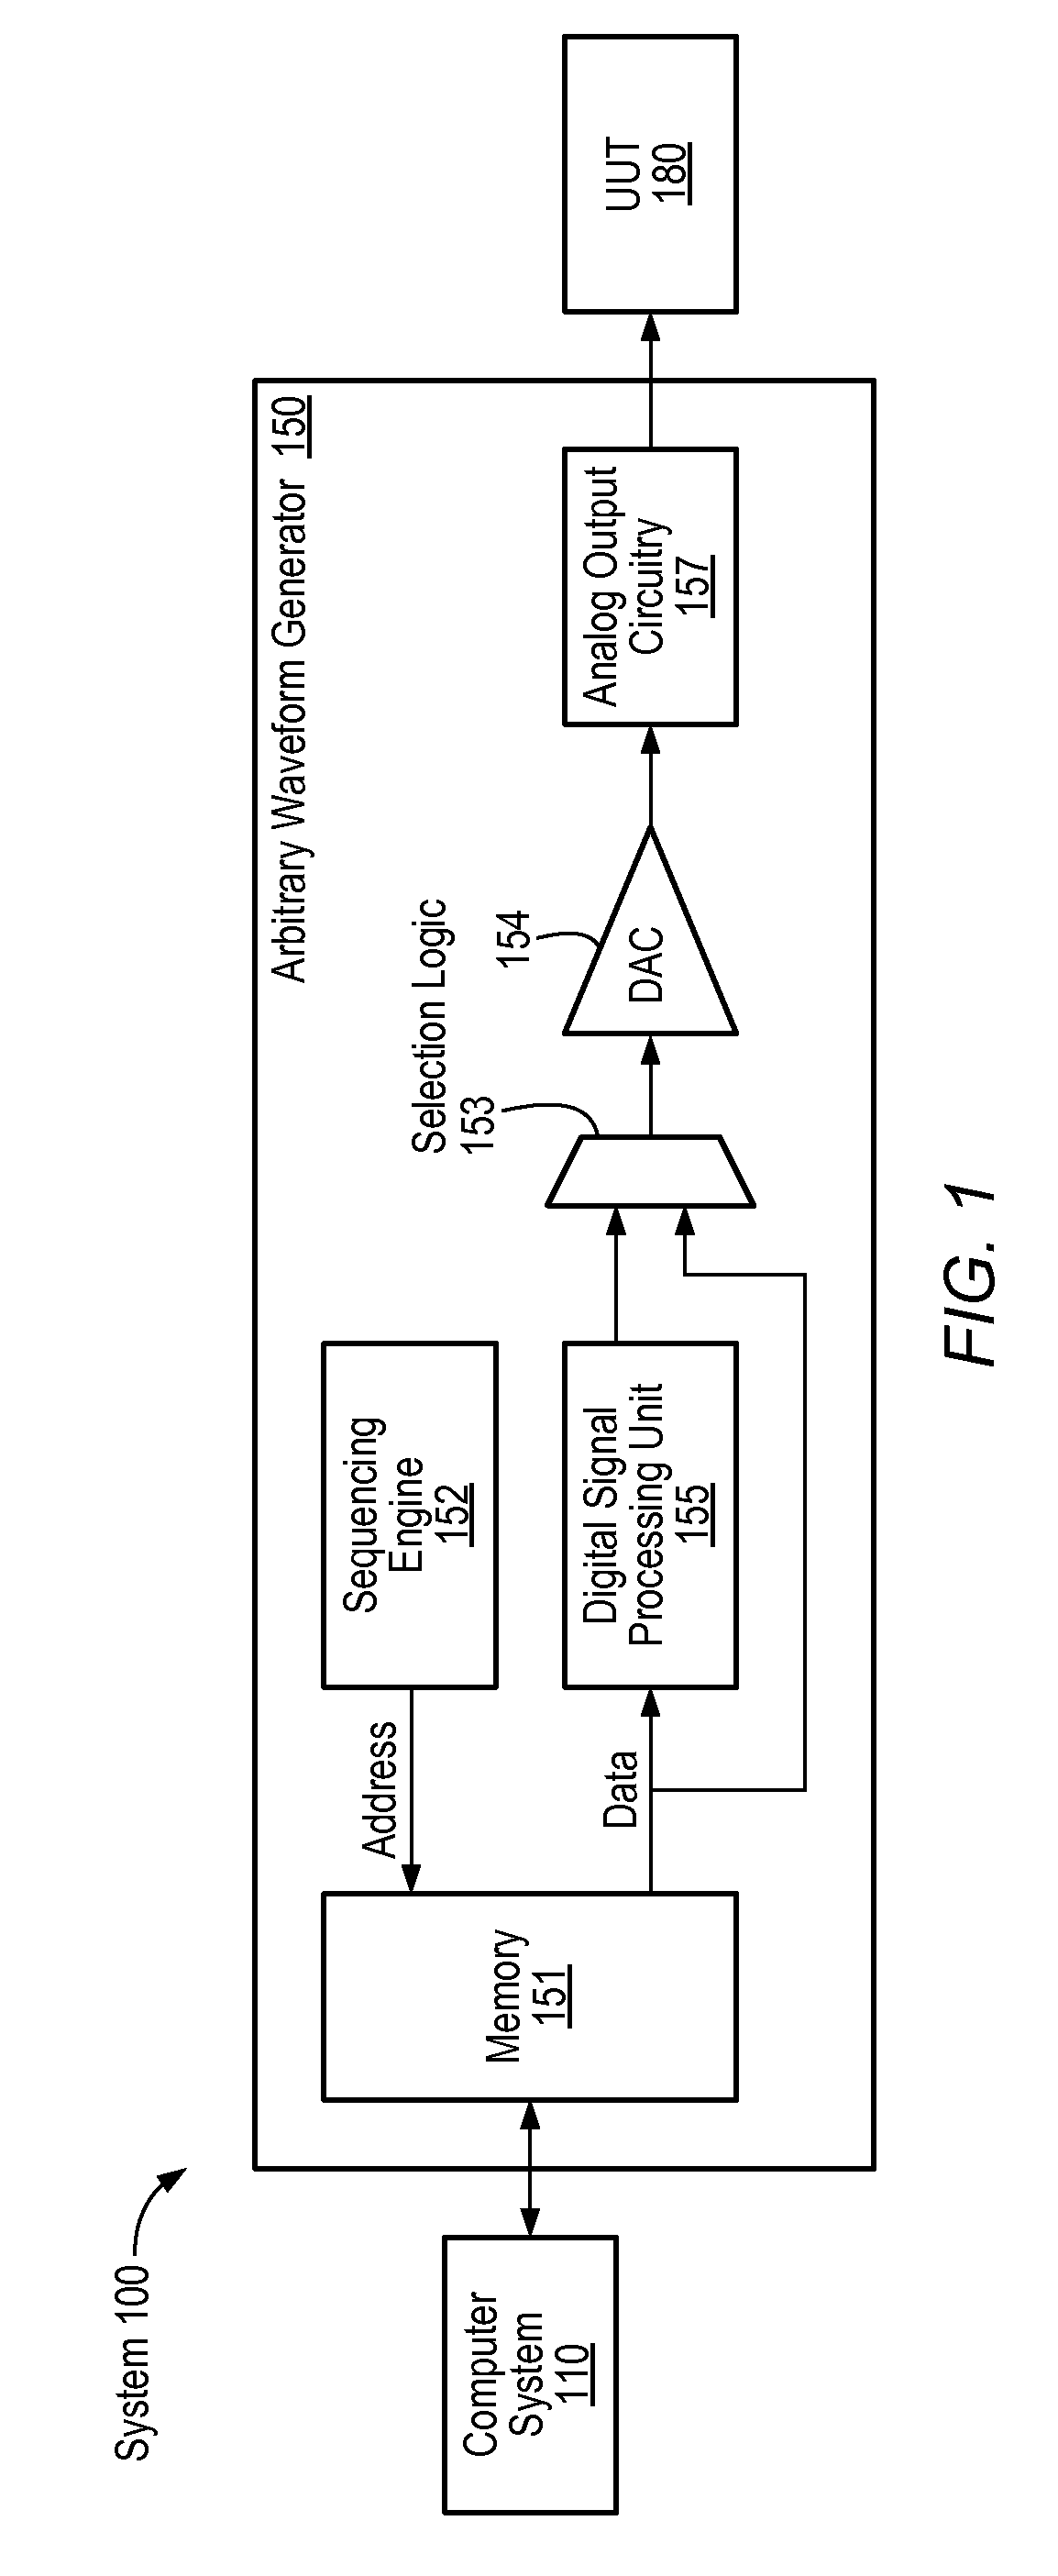 Arbitrary waveform generator with configurable digital signal processing unit